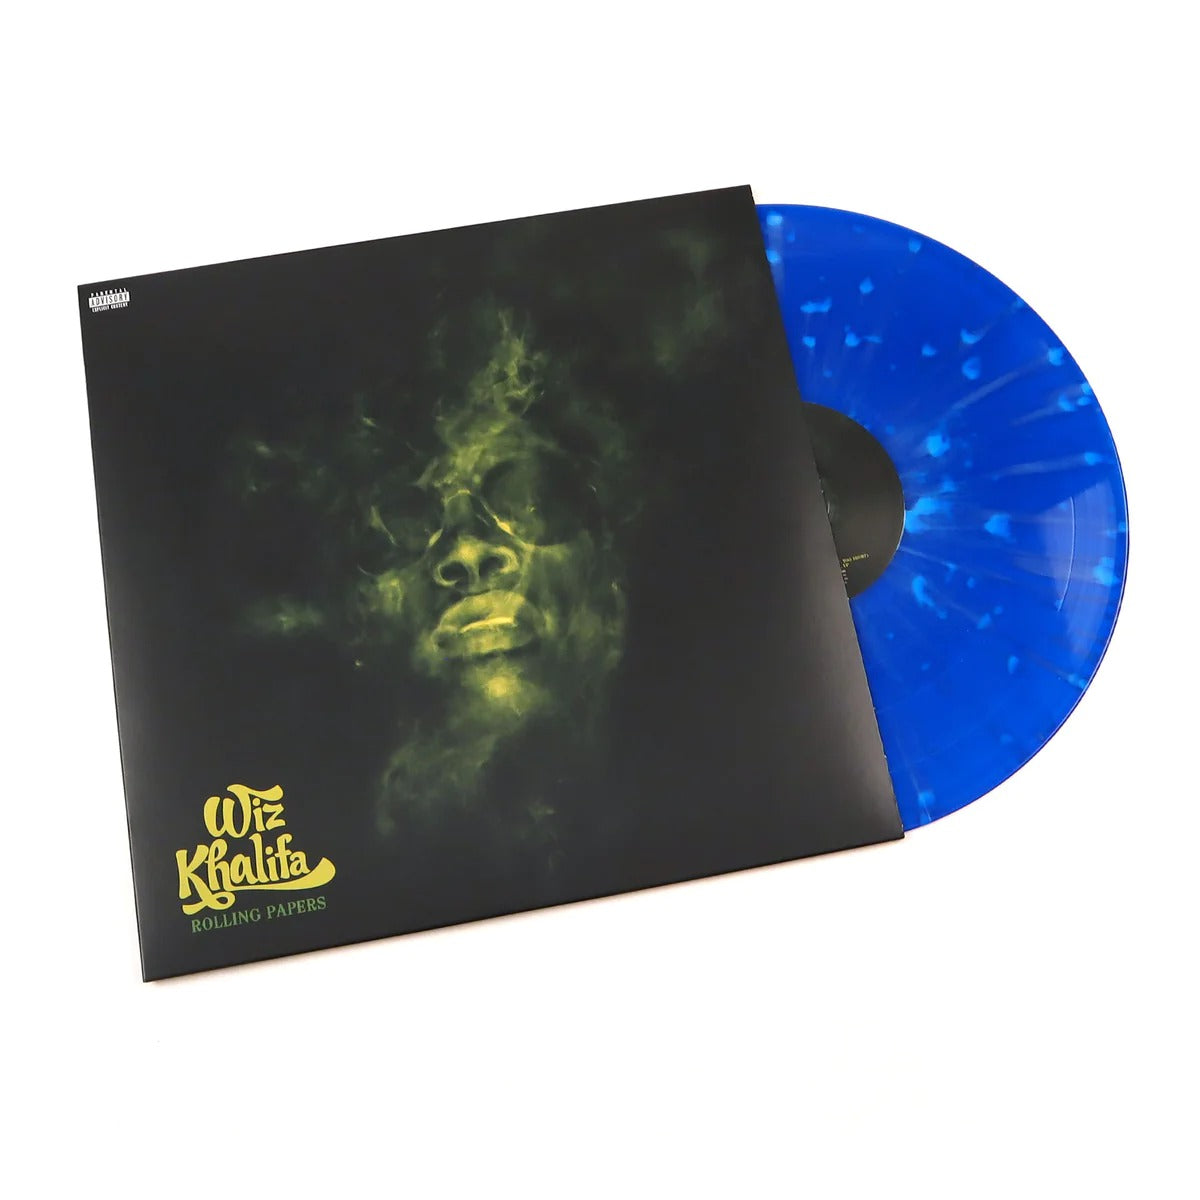 Wiz Khalifa - Rolling Papers 2LP (10th Anniversary, Limited Edition Blue Splatter Vinyl)